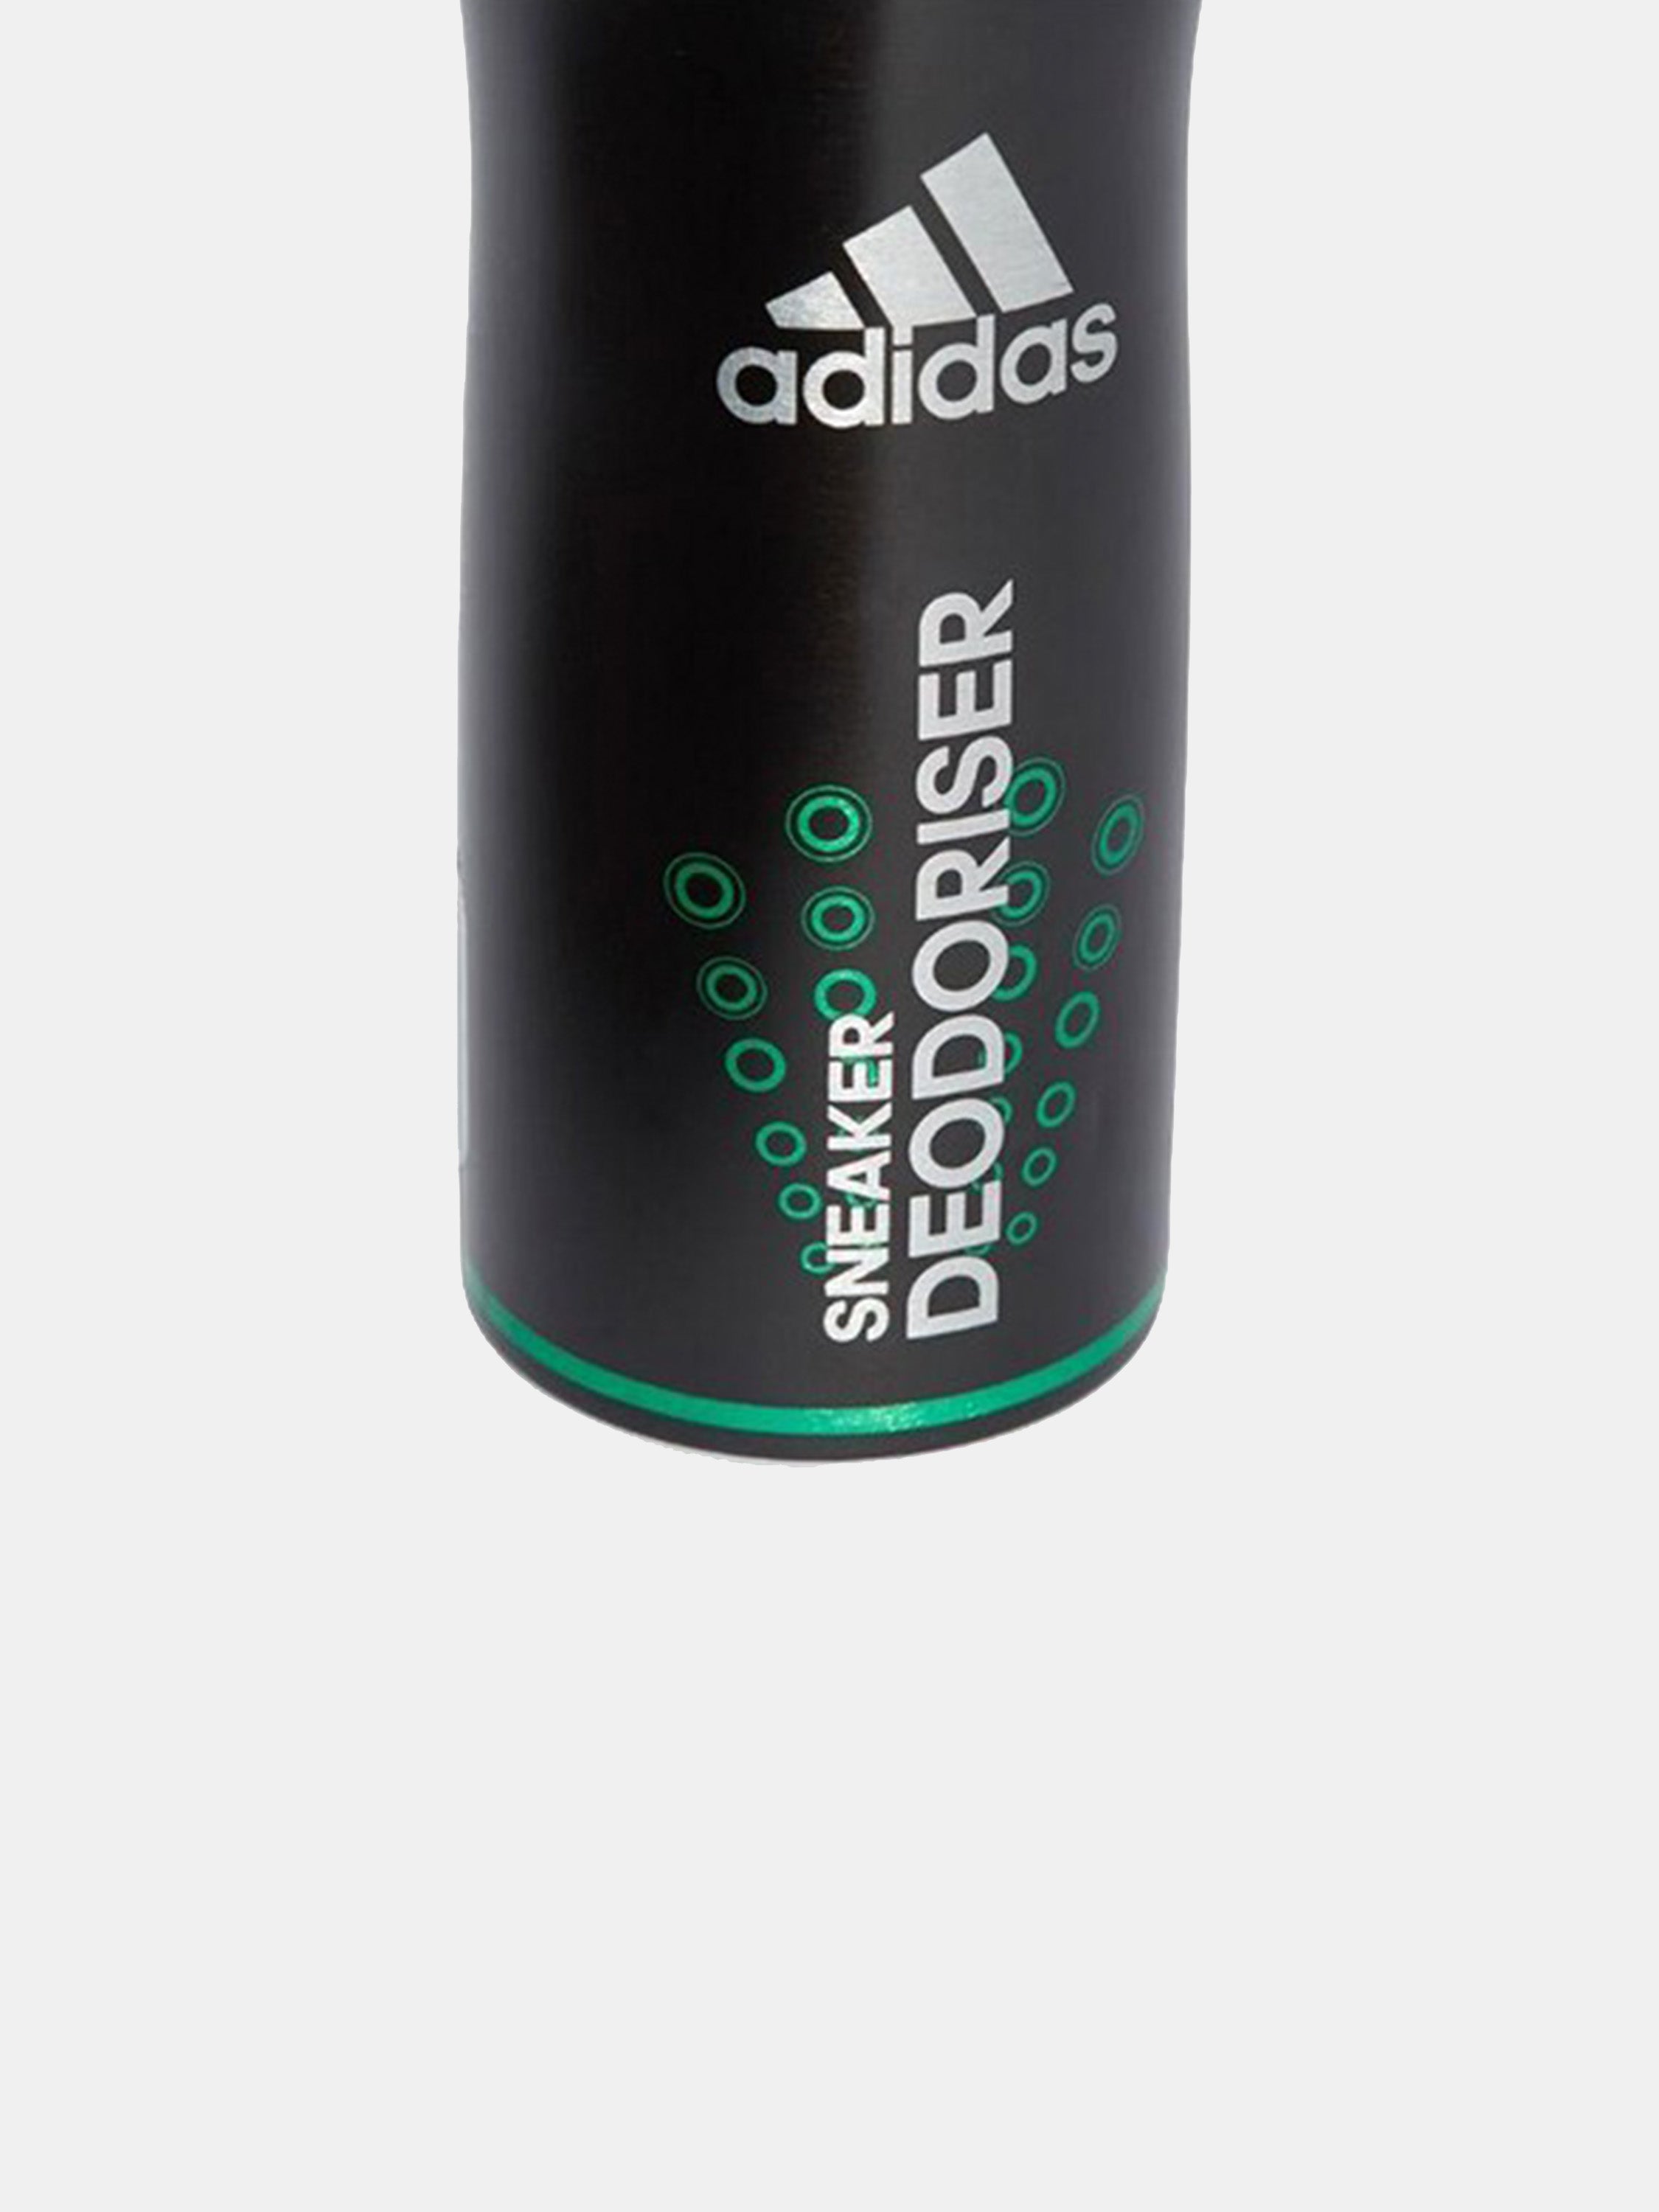 Adidas Shoe Deodoriser - 200ml